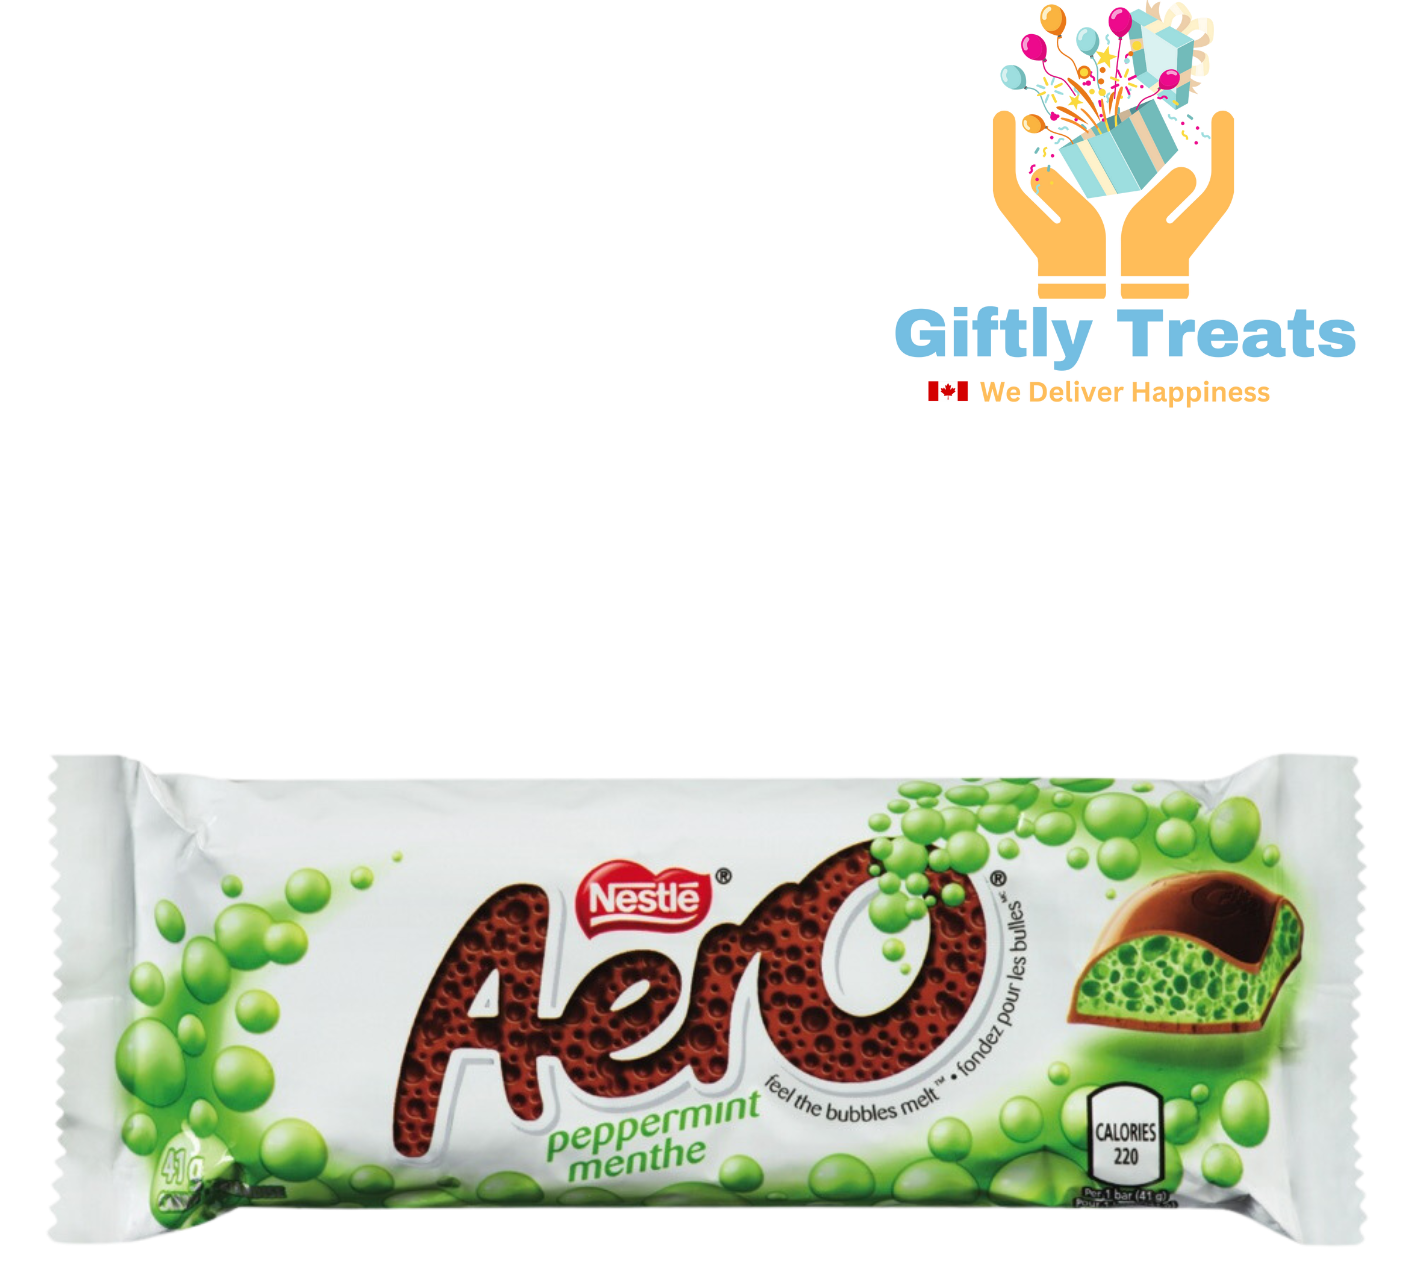 Aero Mint Chocolate